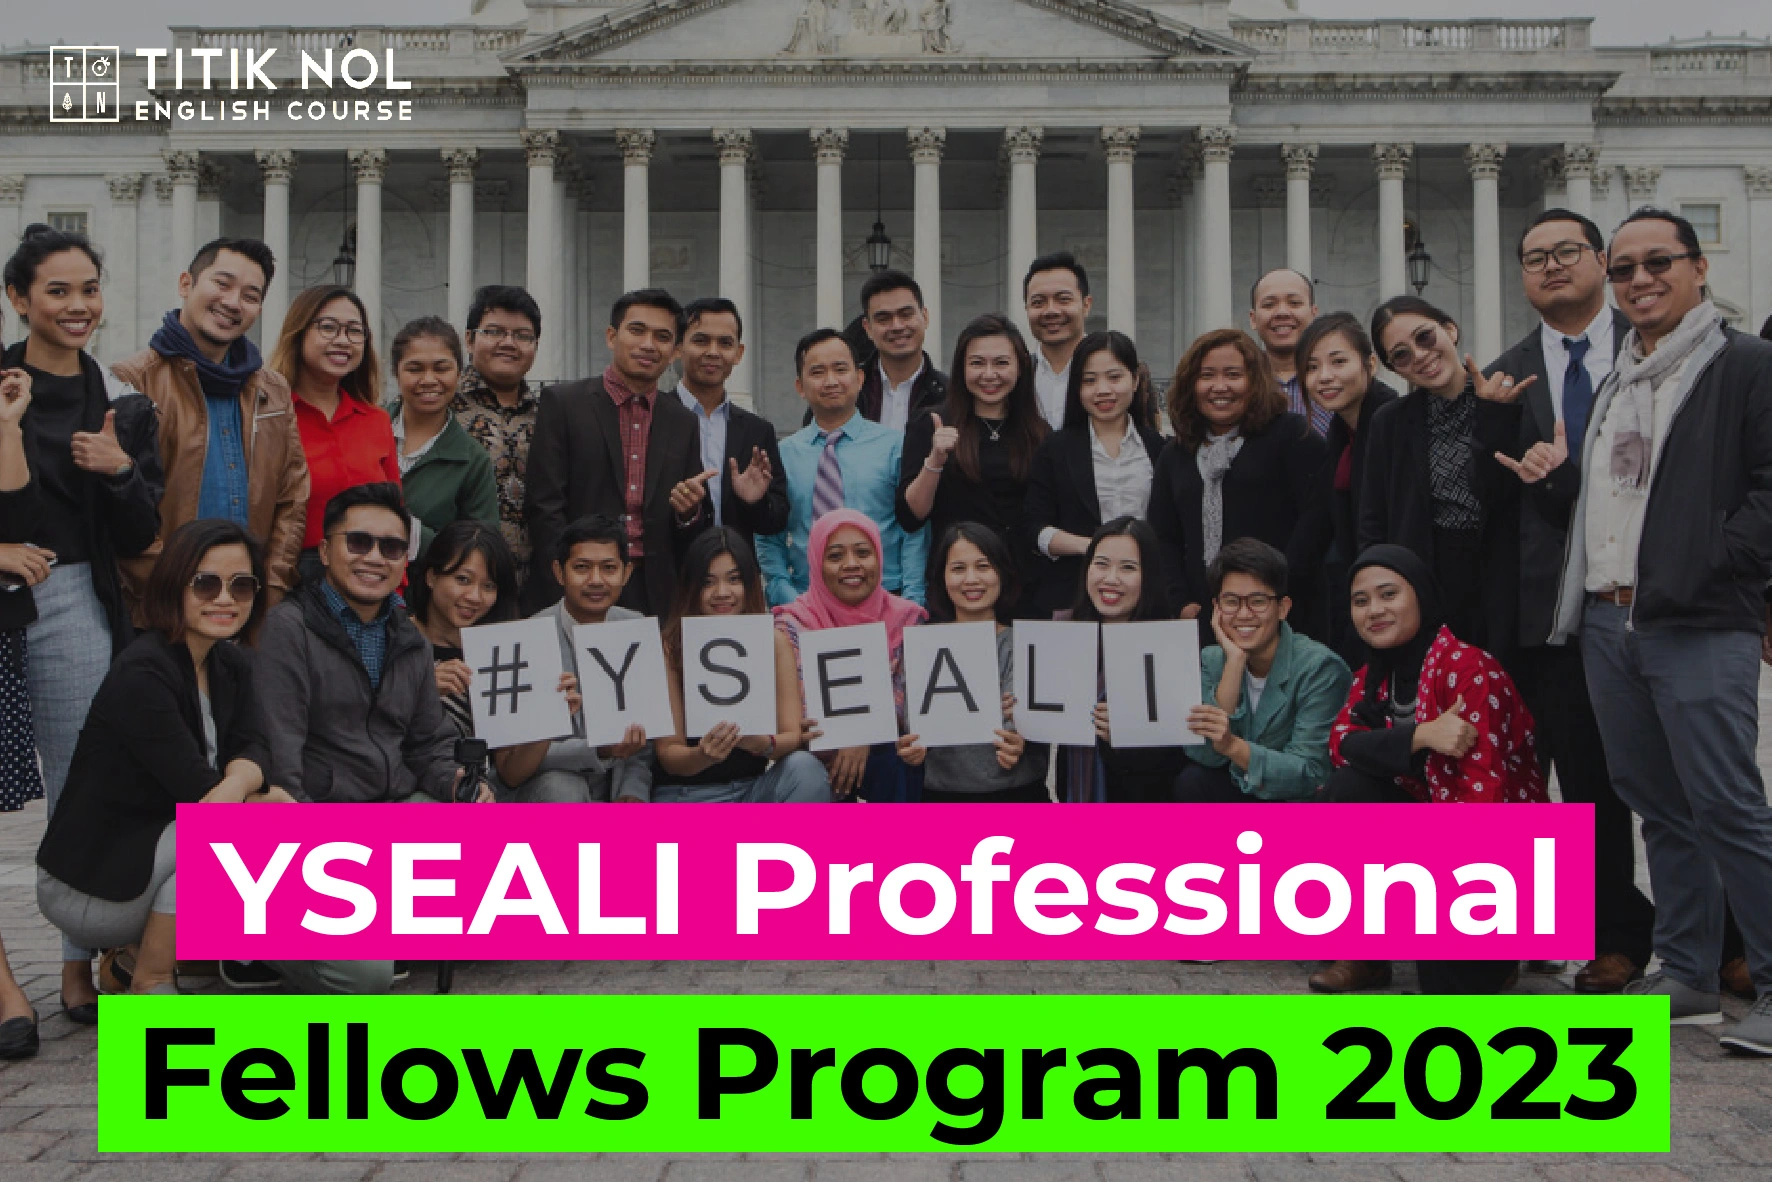 YSEALI Professional Fellows Program 2023